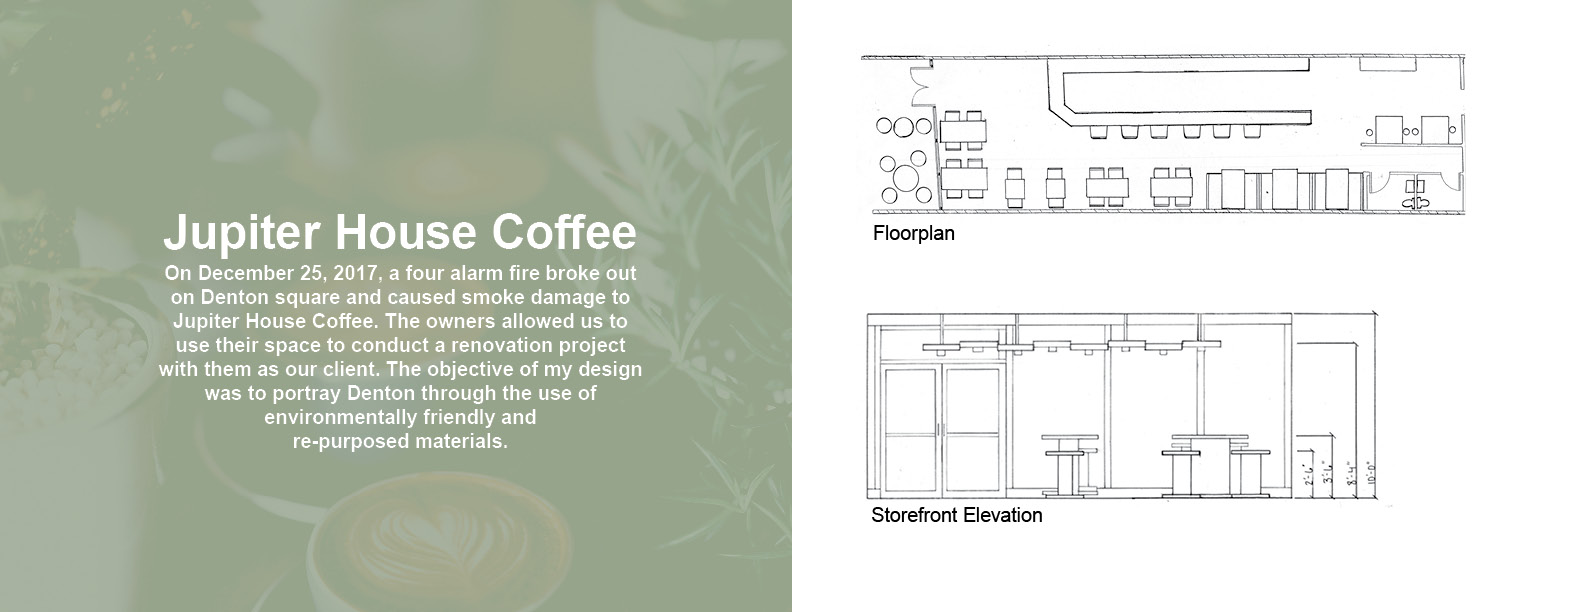 Jupiter house coffee - Floor plan and storefront elevation